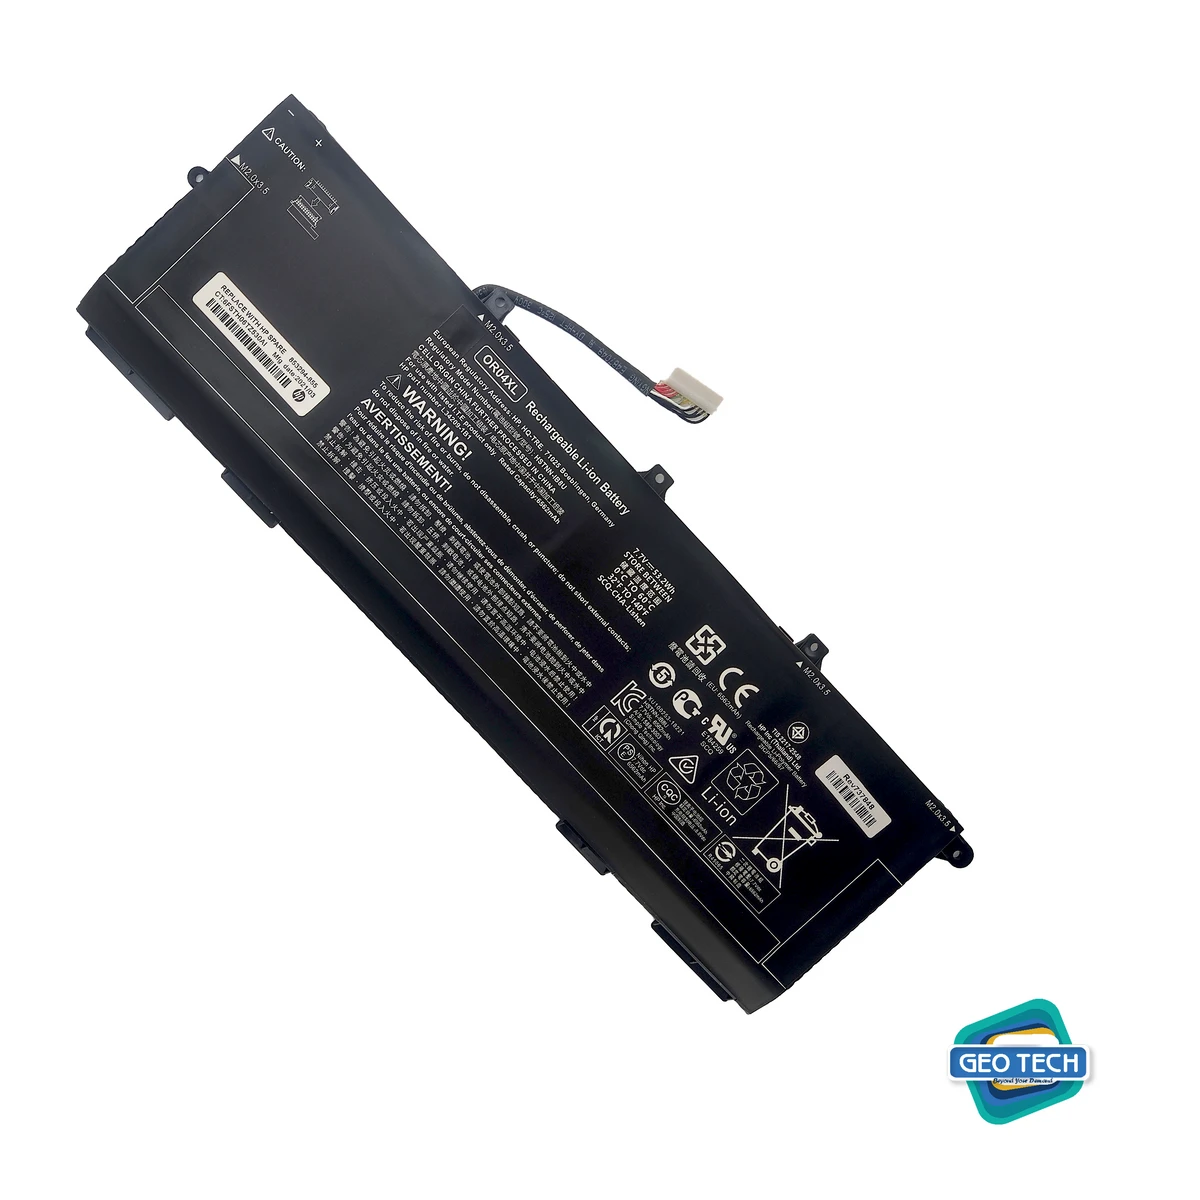 OR04XL HSTNN-IB8U Laptop Battery Compatible with HP EliteBook x360 830 G5 G6 Series Notebook HSTNN-DB9C L34449-002 L34449-005 L34209-1B1 L34209-2B1 7.7V 53.2Wh 6562mAh